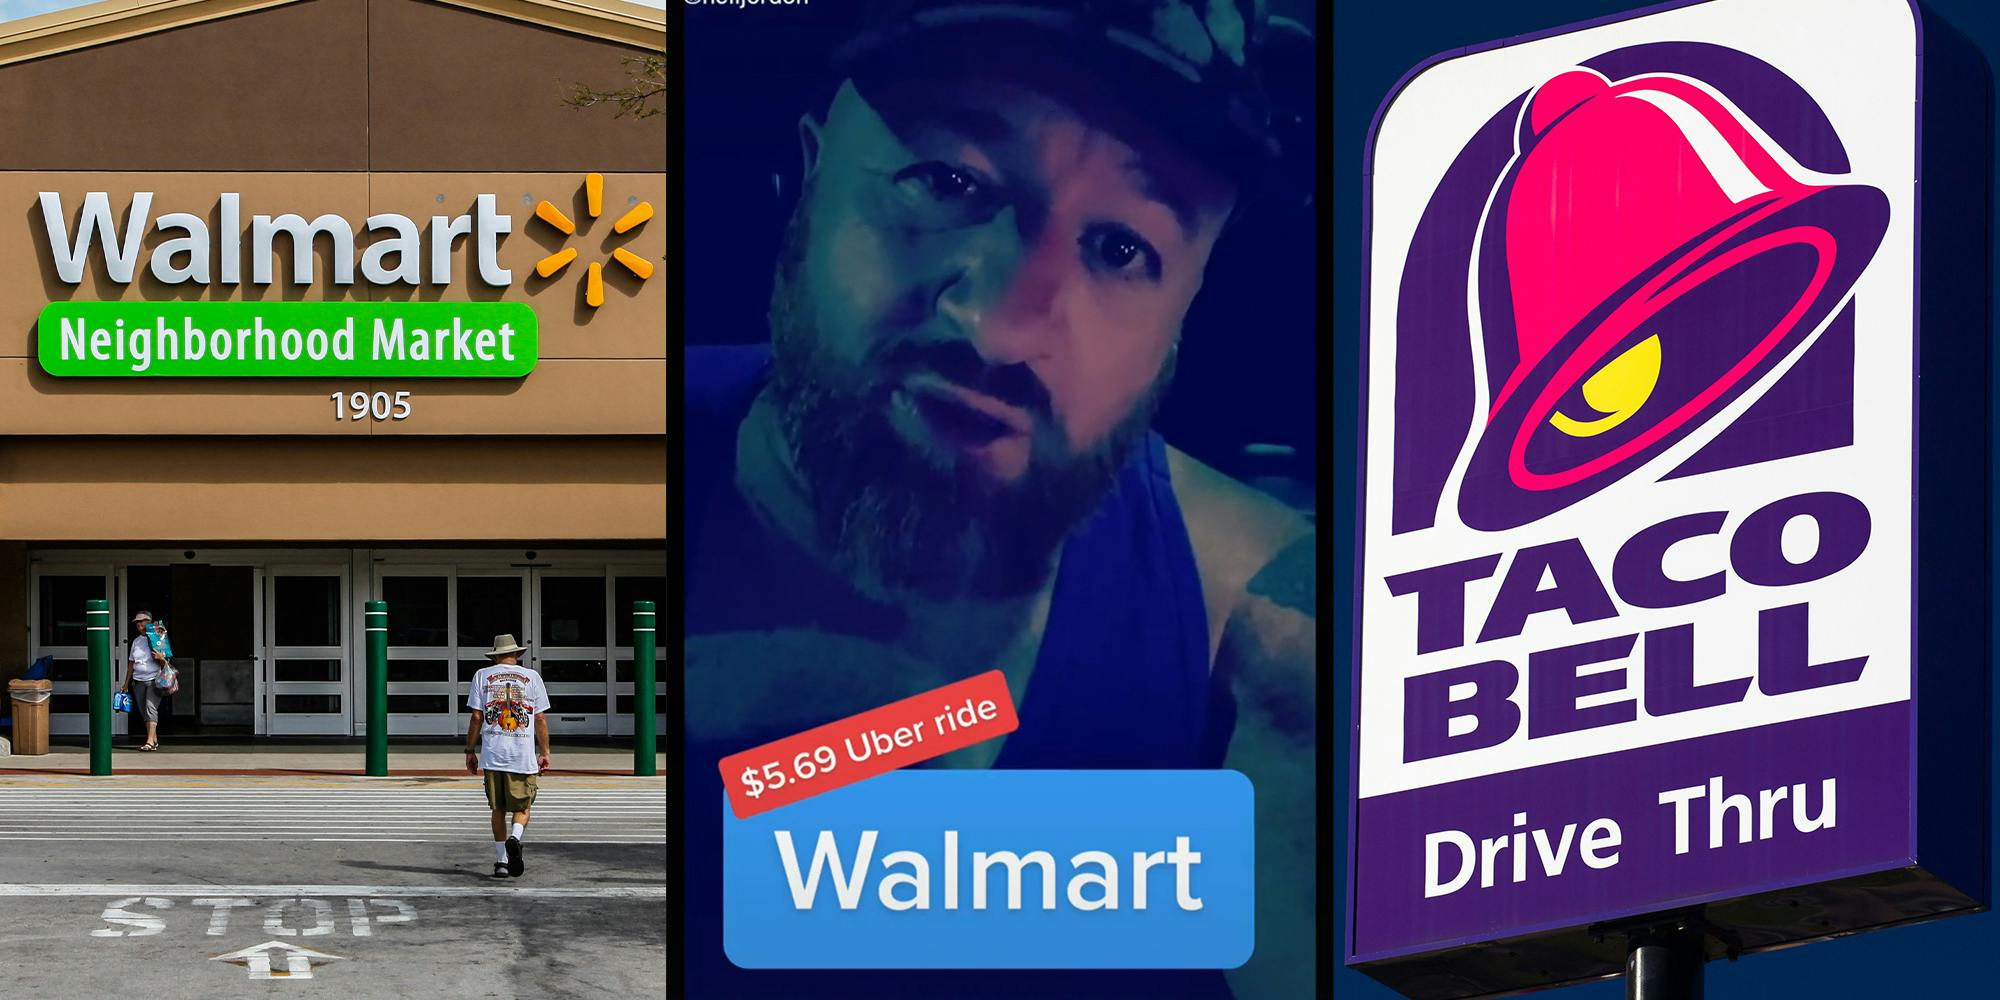 walmart neighborhood market sign (l) man in car with caption "$5.69 Uber ride - Walmart" (c) Taco Bell drive thru sign (r)